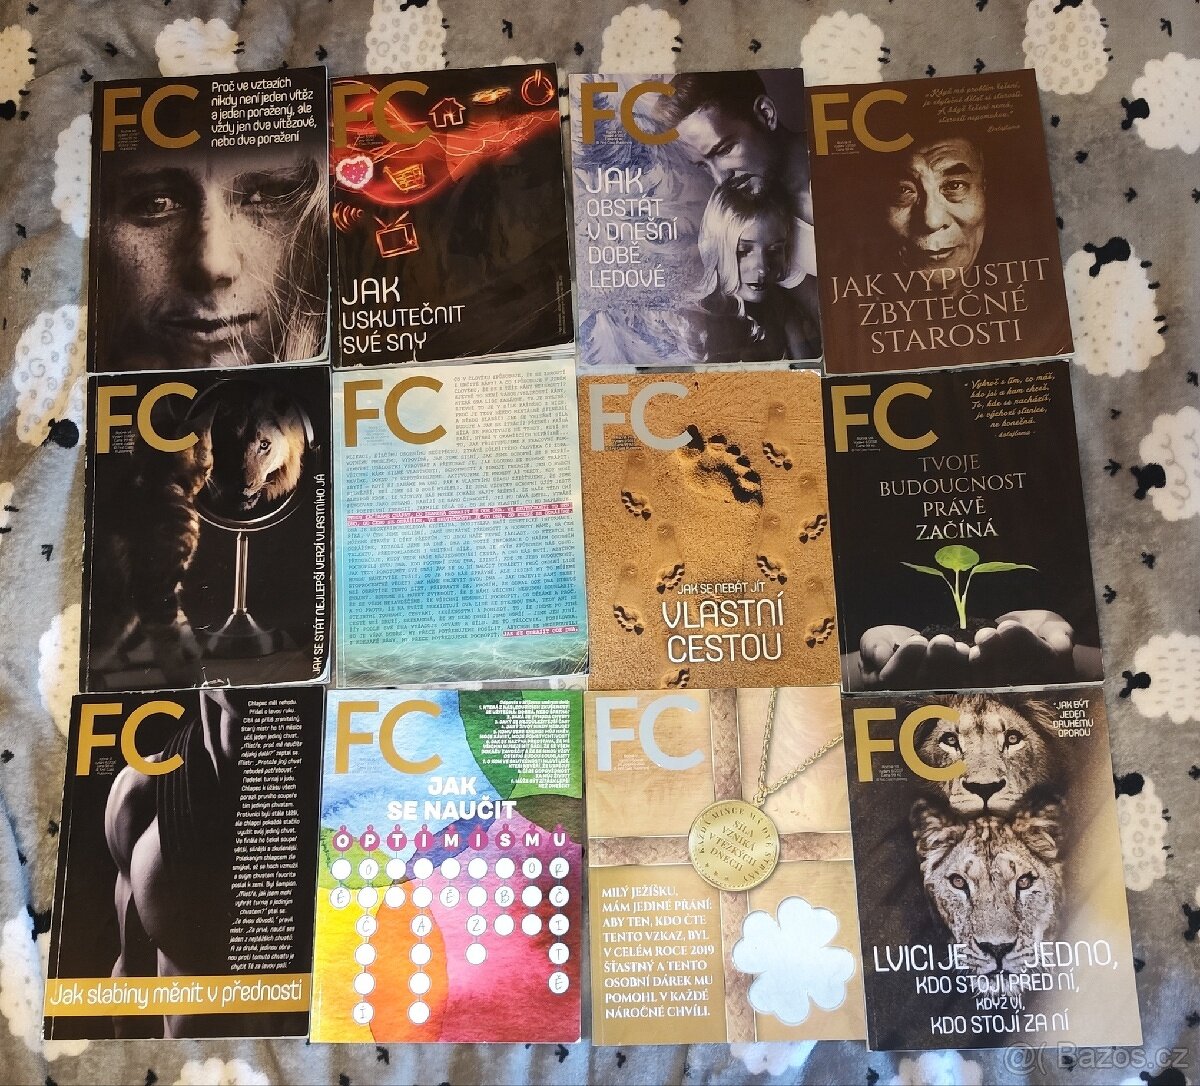 12 x časopis FirstClass++FC

